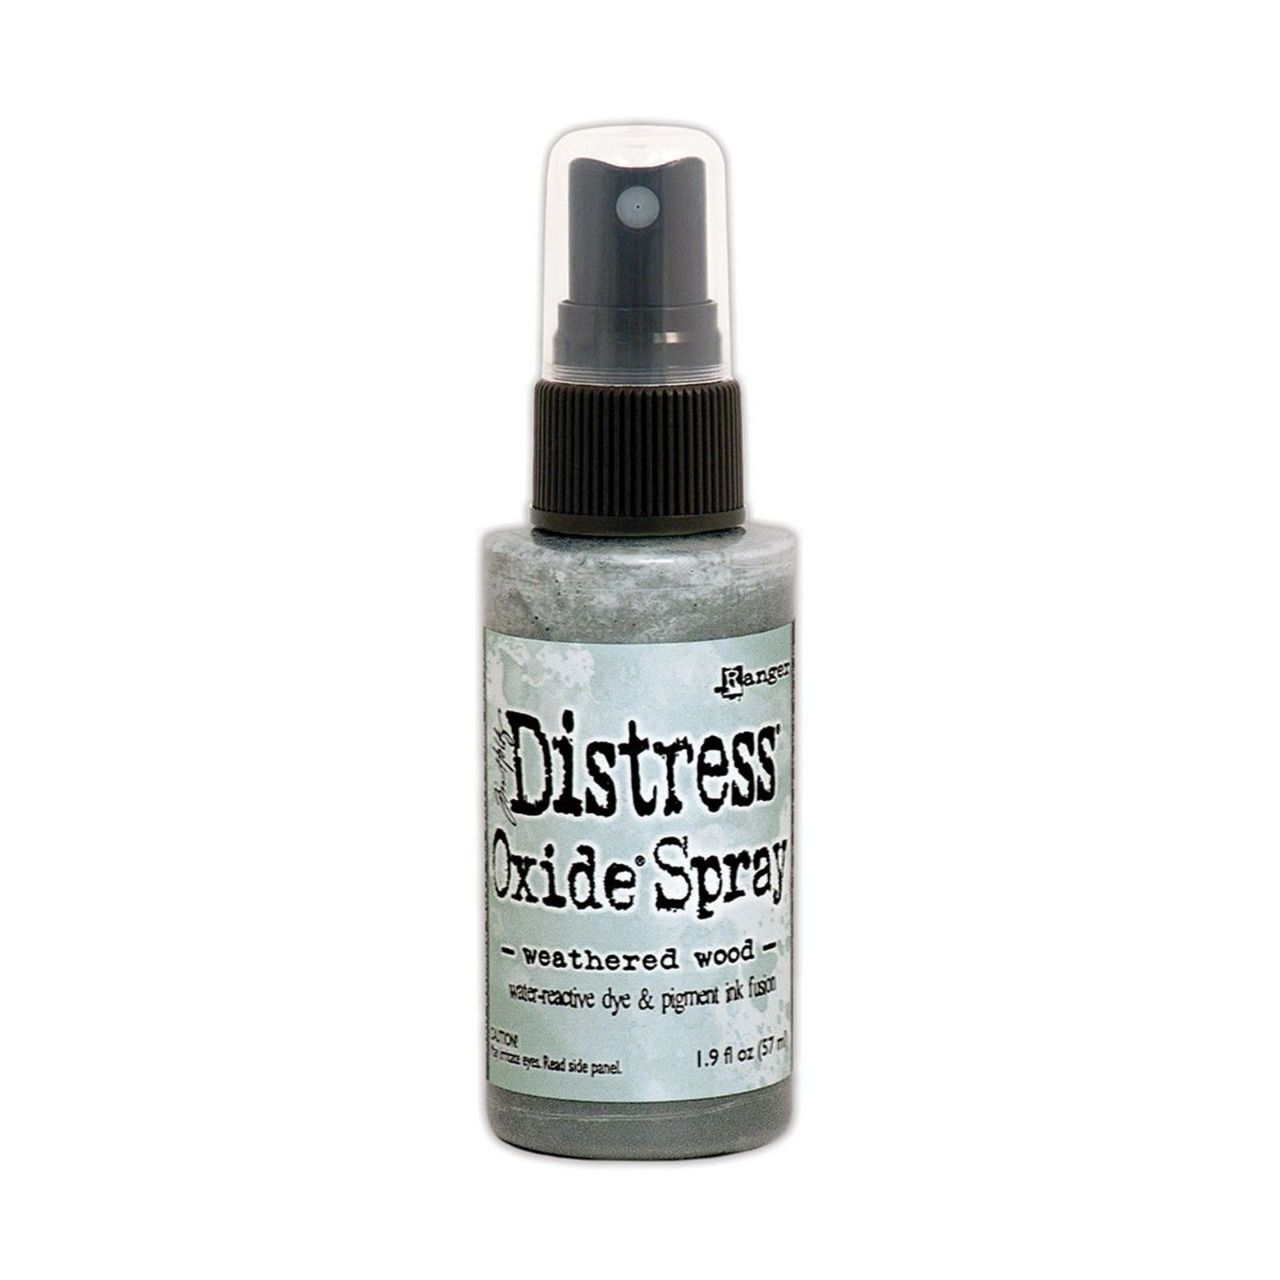 Distress spray oxide : Weathered wood